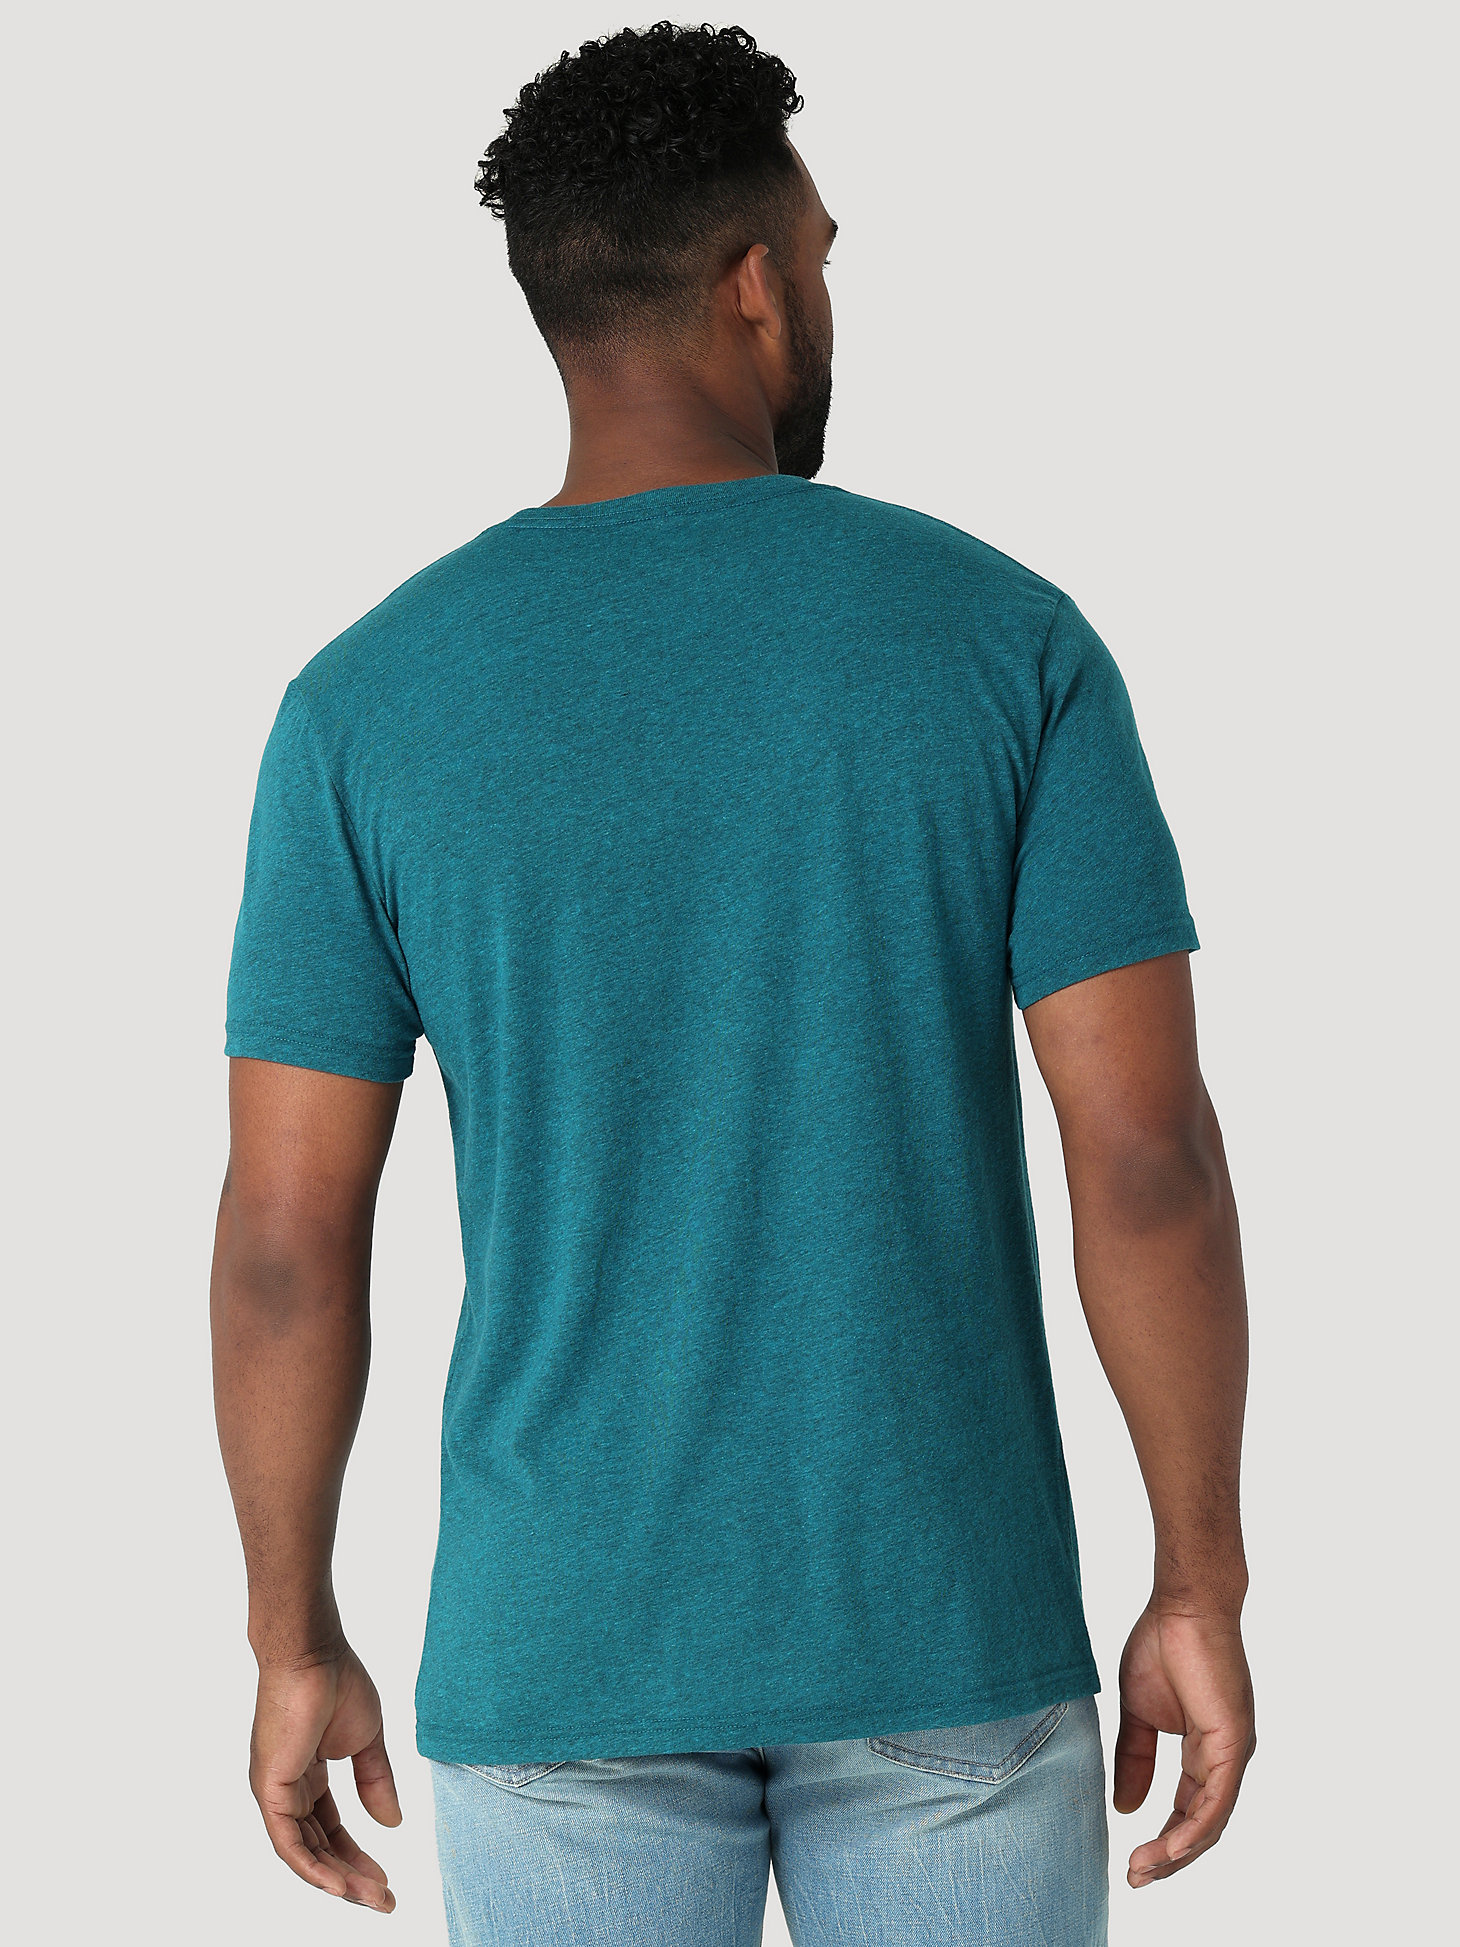 Men's George Strait Short Sleeve Rodeo Graphic T-Shirt in Cyan Pepper Heather alternative view 2